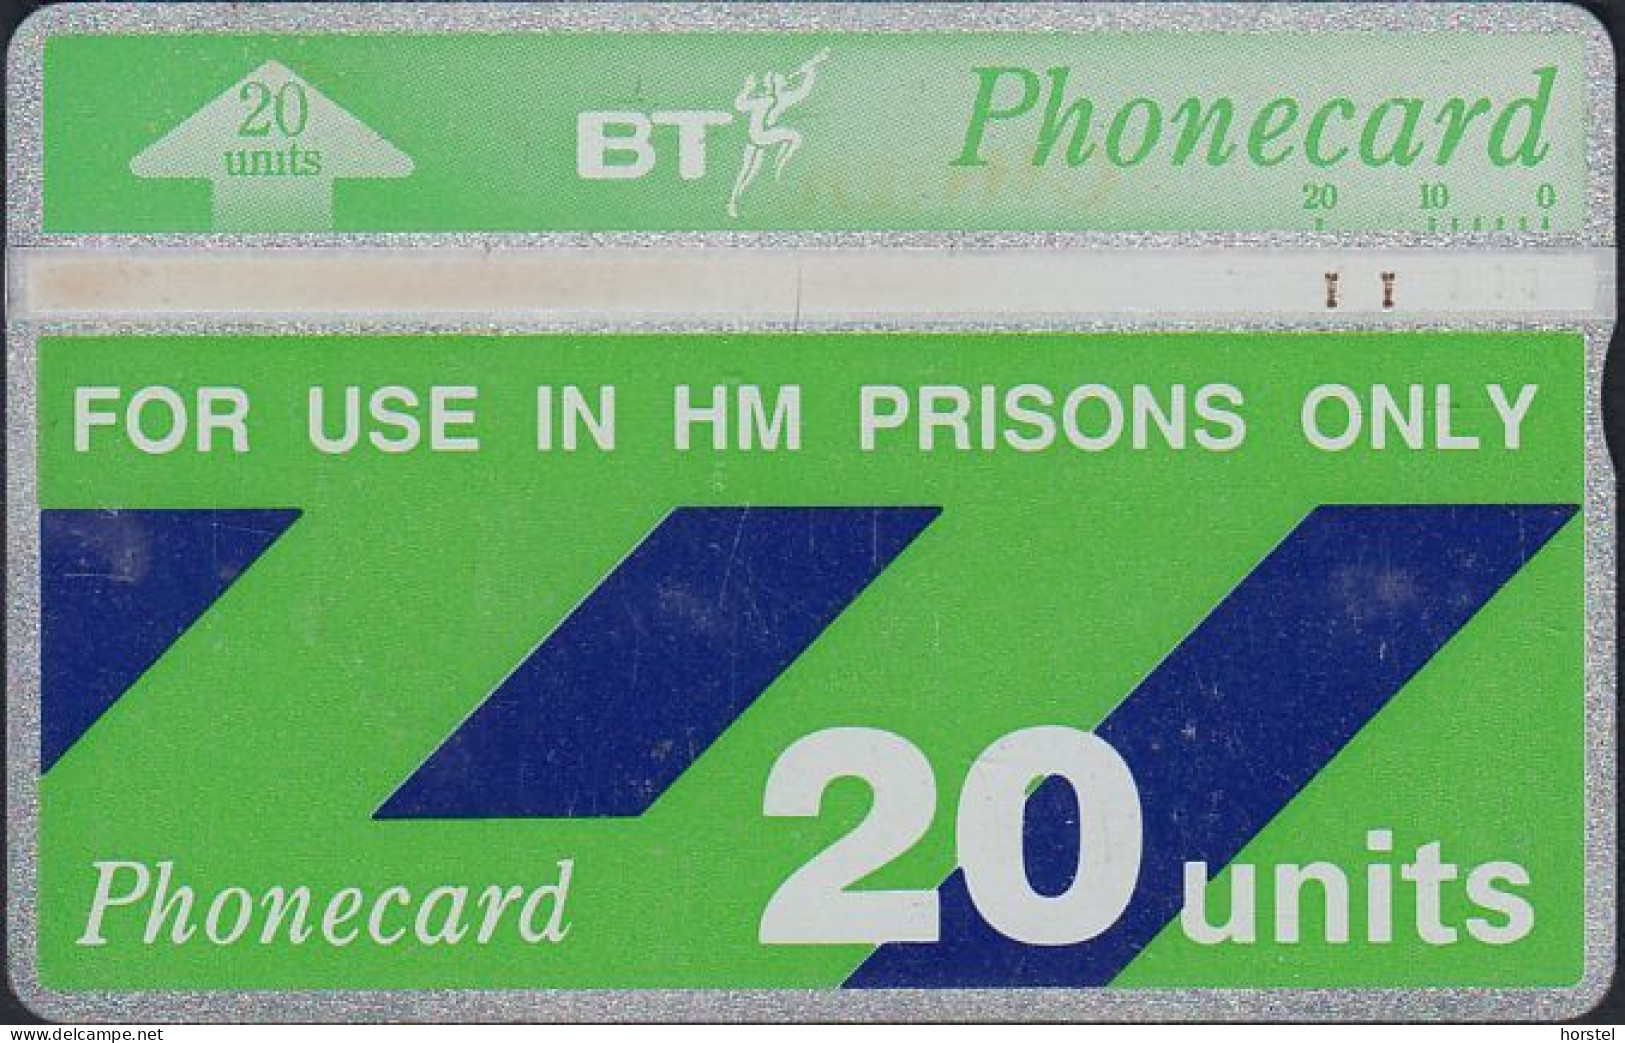 UK - British Telecom L&G H.M. Prison Card CUP005  (212F)  20 Units - Gevangenissen